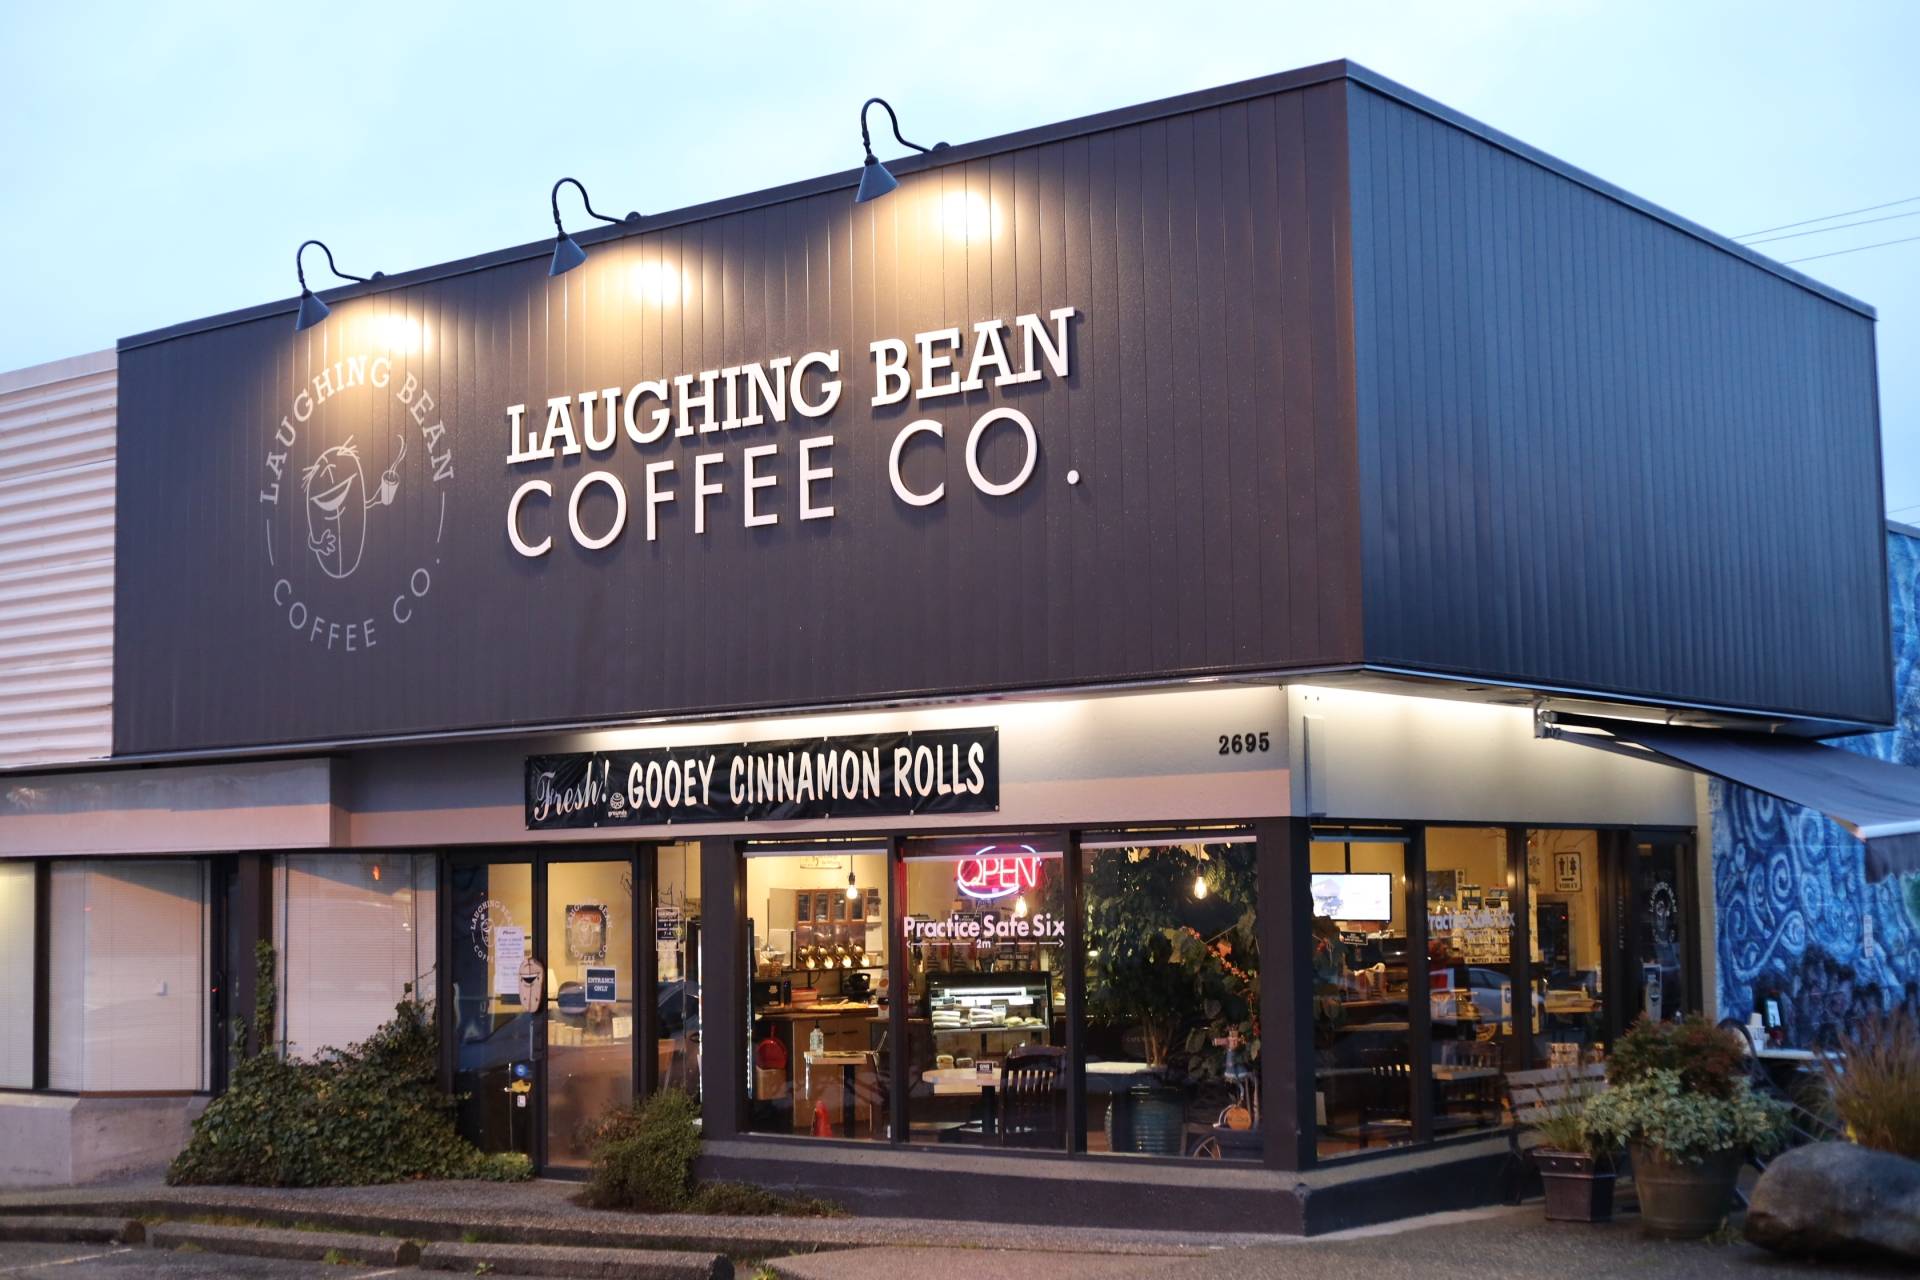 Laughing Bean Coffee Co